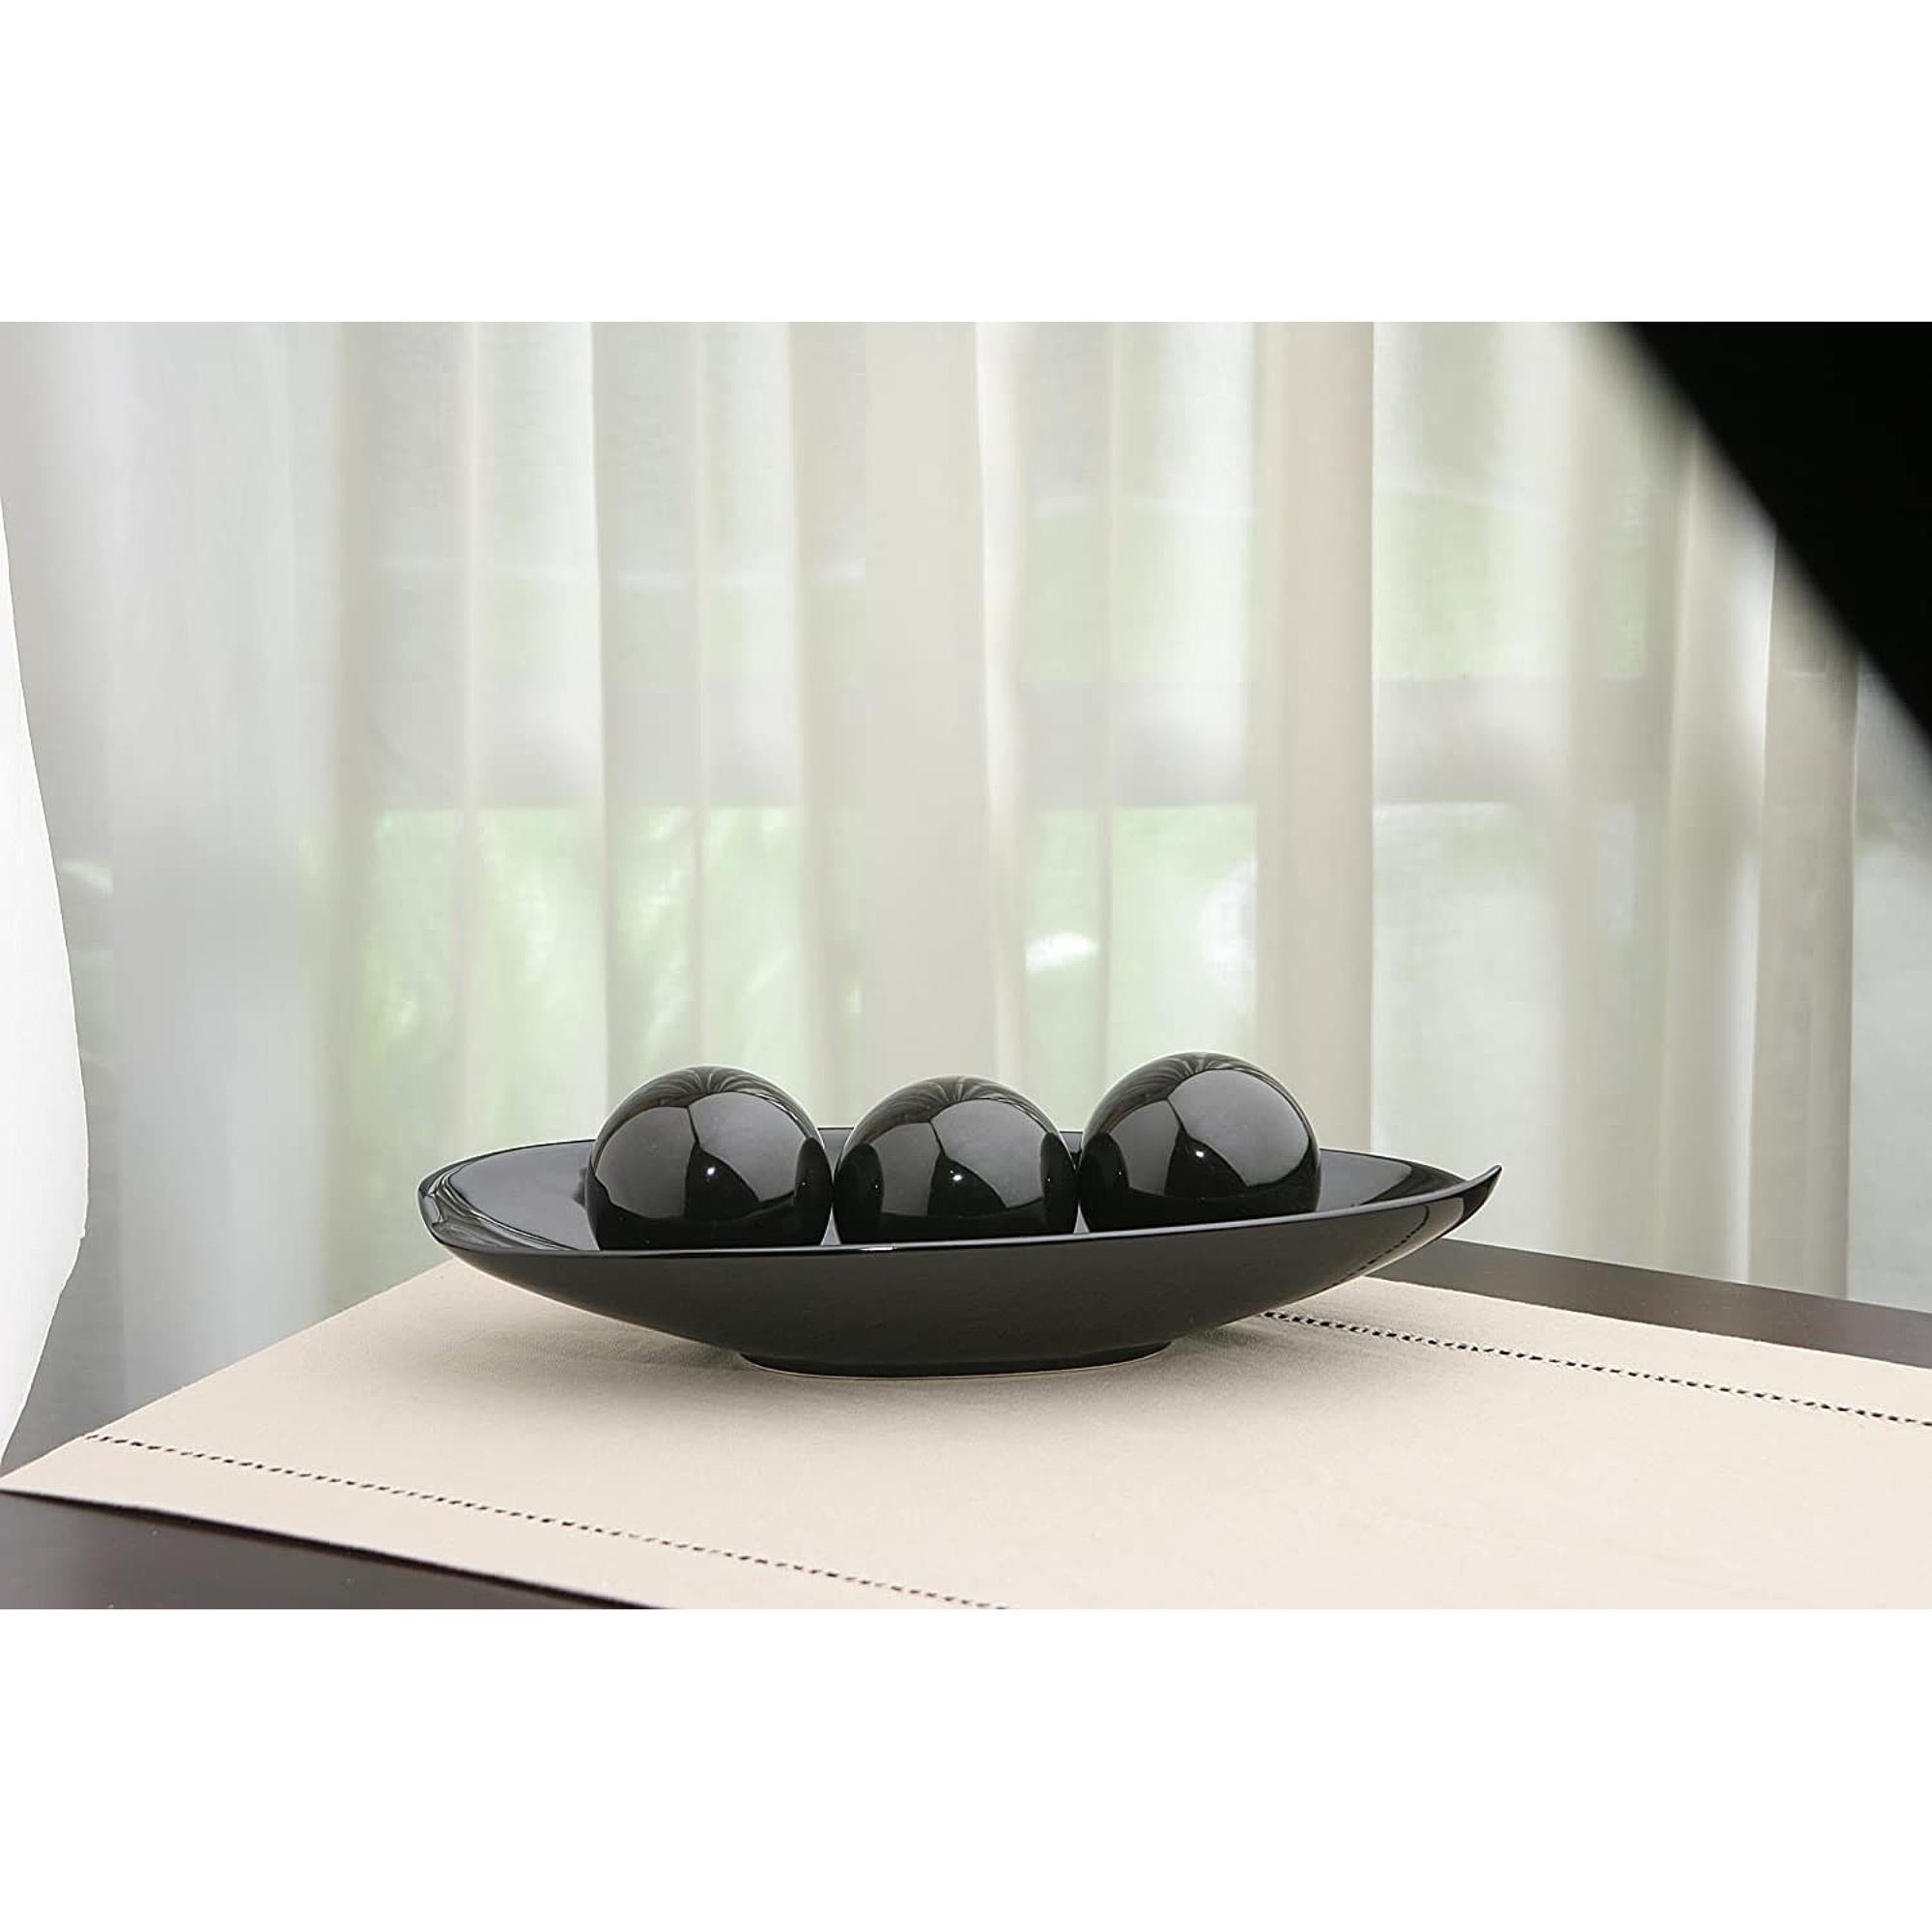 HOSLEY® Ceramic Decorative Bow and Orb set, Black Glazed – The